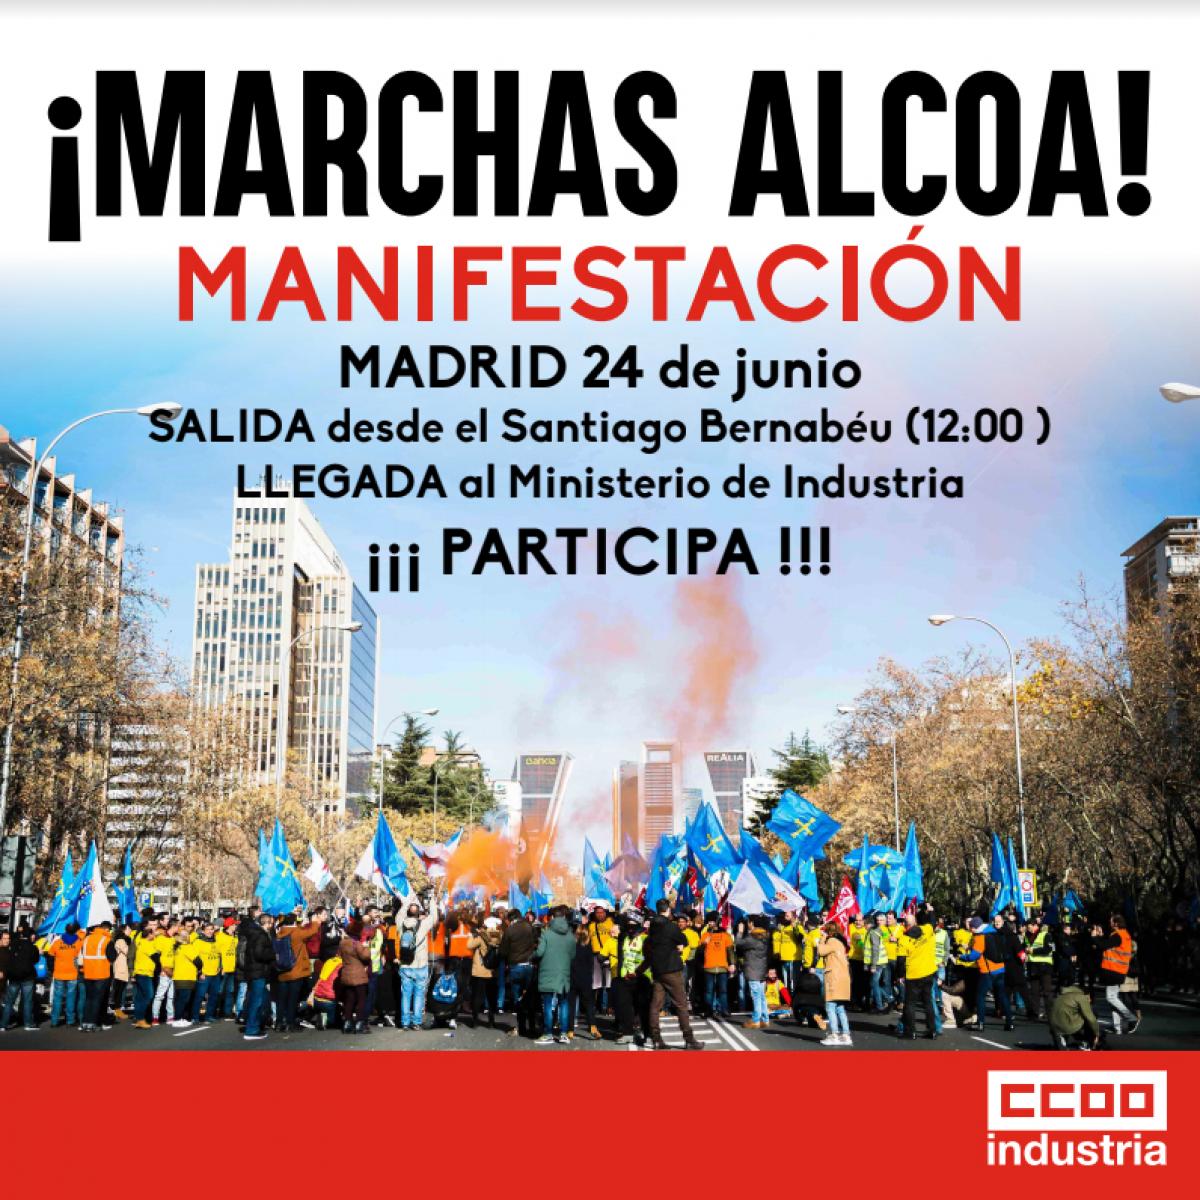 Manifestaci�n de Alcoa en Madrid